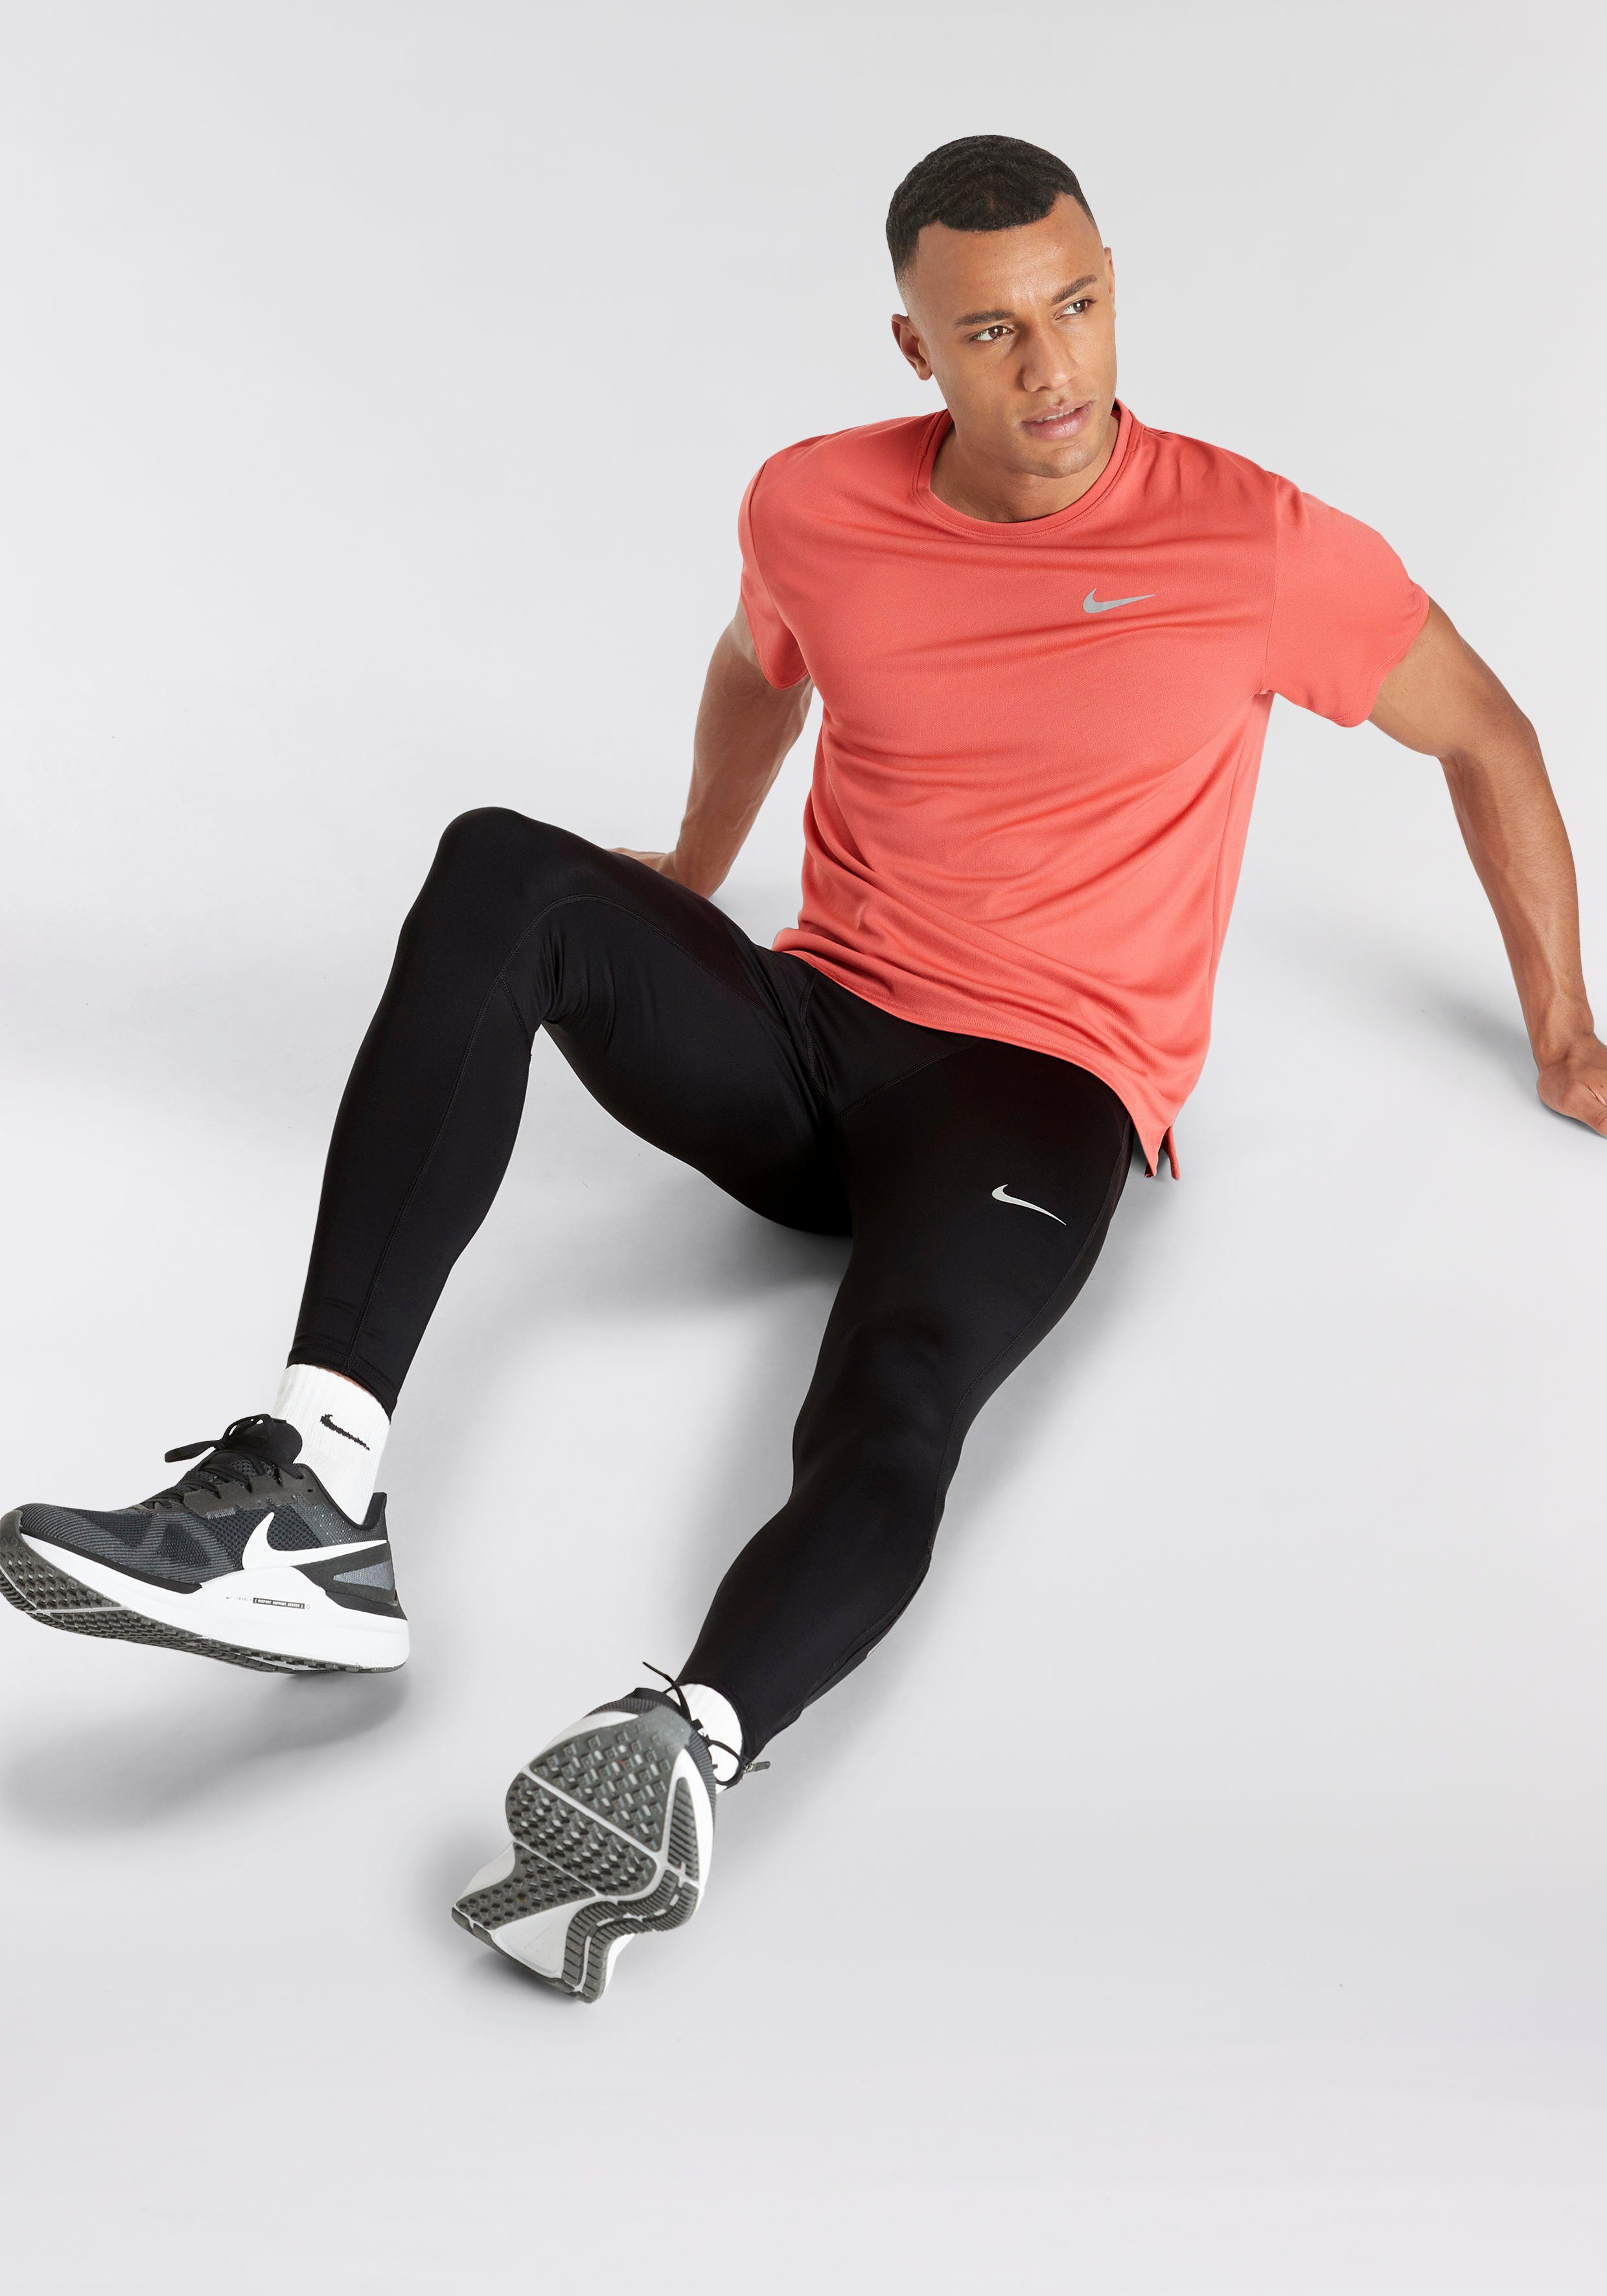 SHORT-SLEEVE SILV UV Nike MILER TOP RUNNING Laufshirt MEN'S ADOBE/REFLECTIVE DRI-FIT